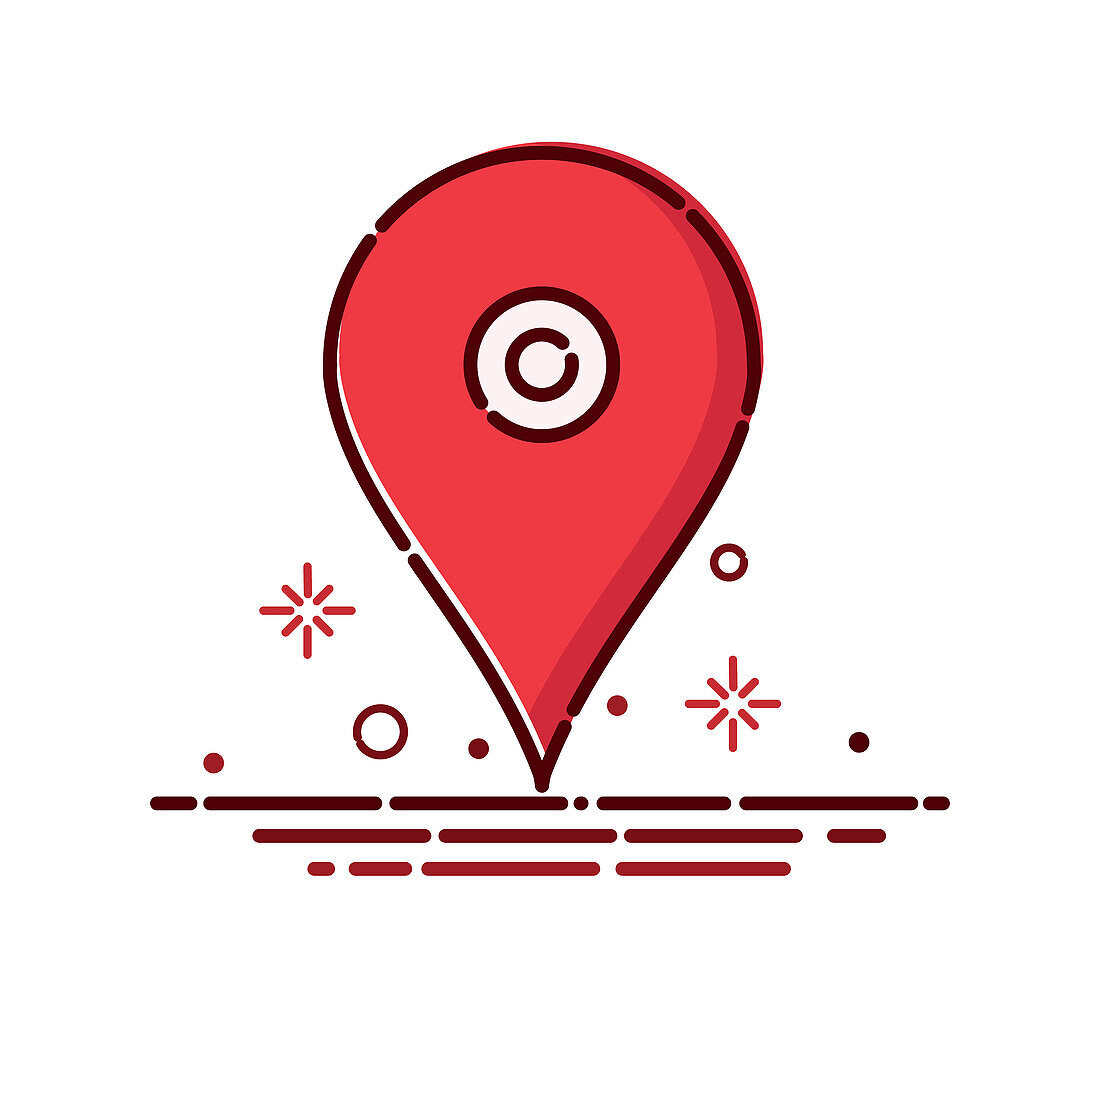 Location map pin, conceptual illustration